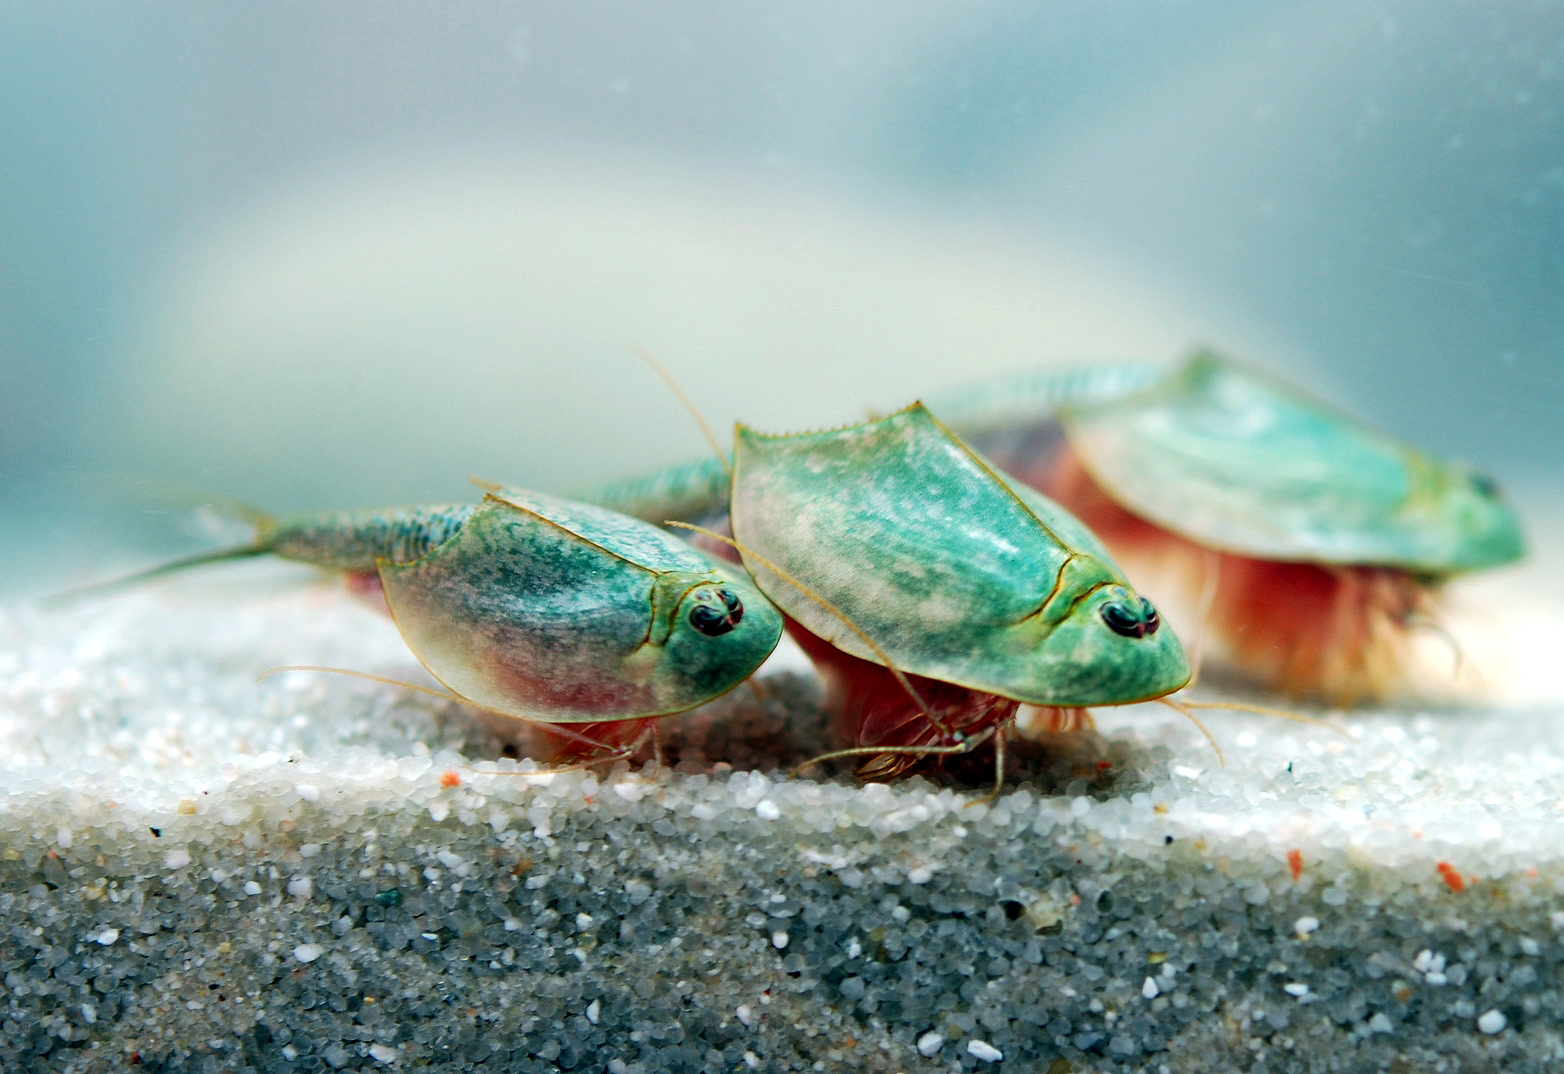 three Triops longicaudatus shrimp in an aquarium; they're mostly green with red-toned legs